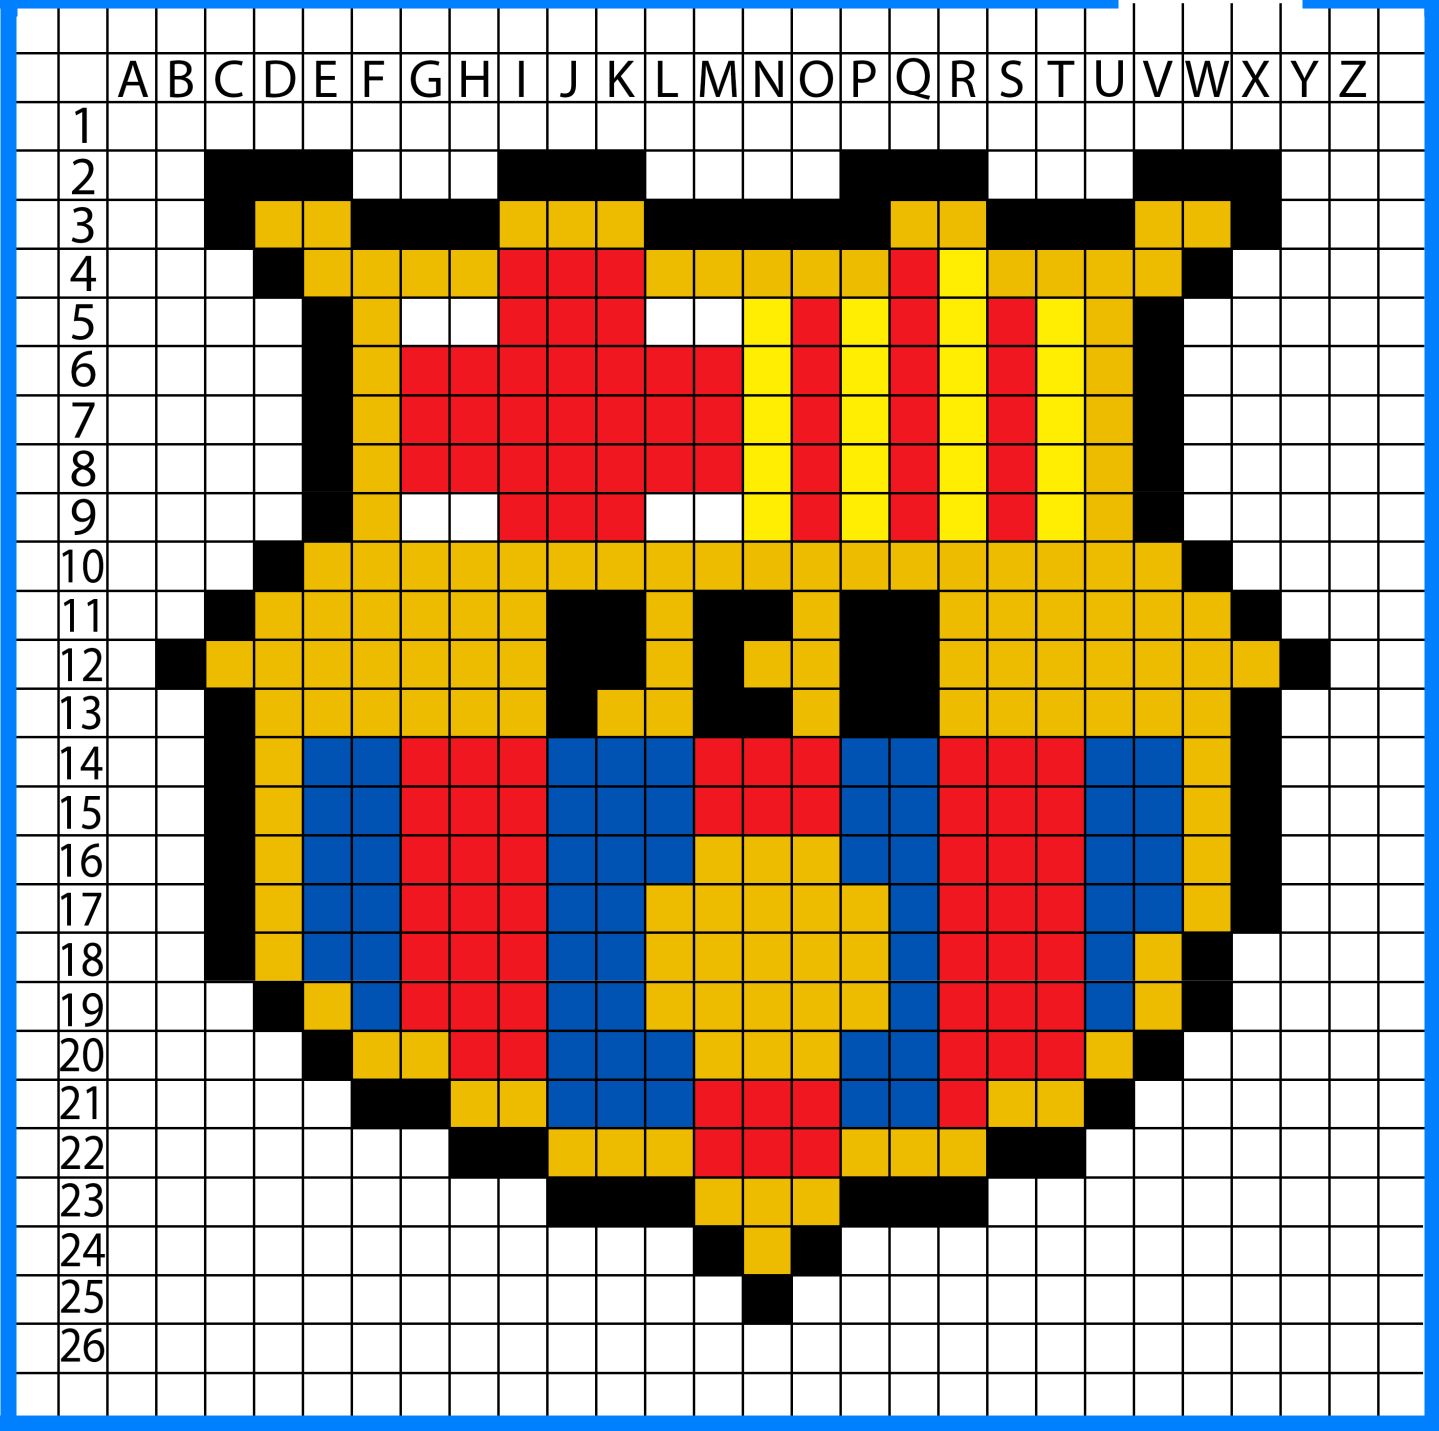 FC Barcelone Pixel art